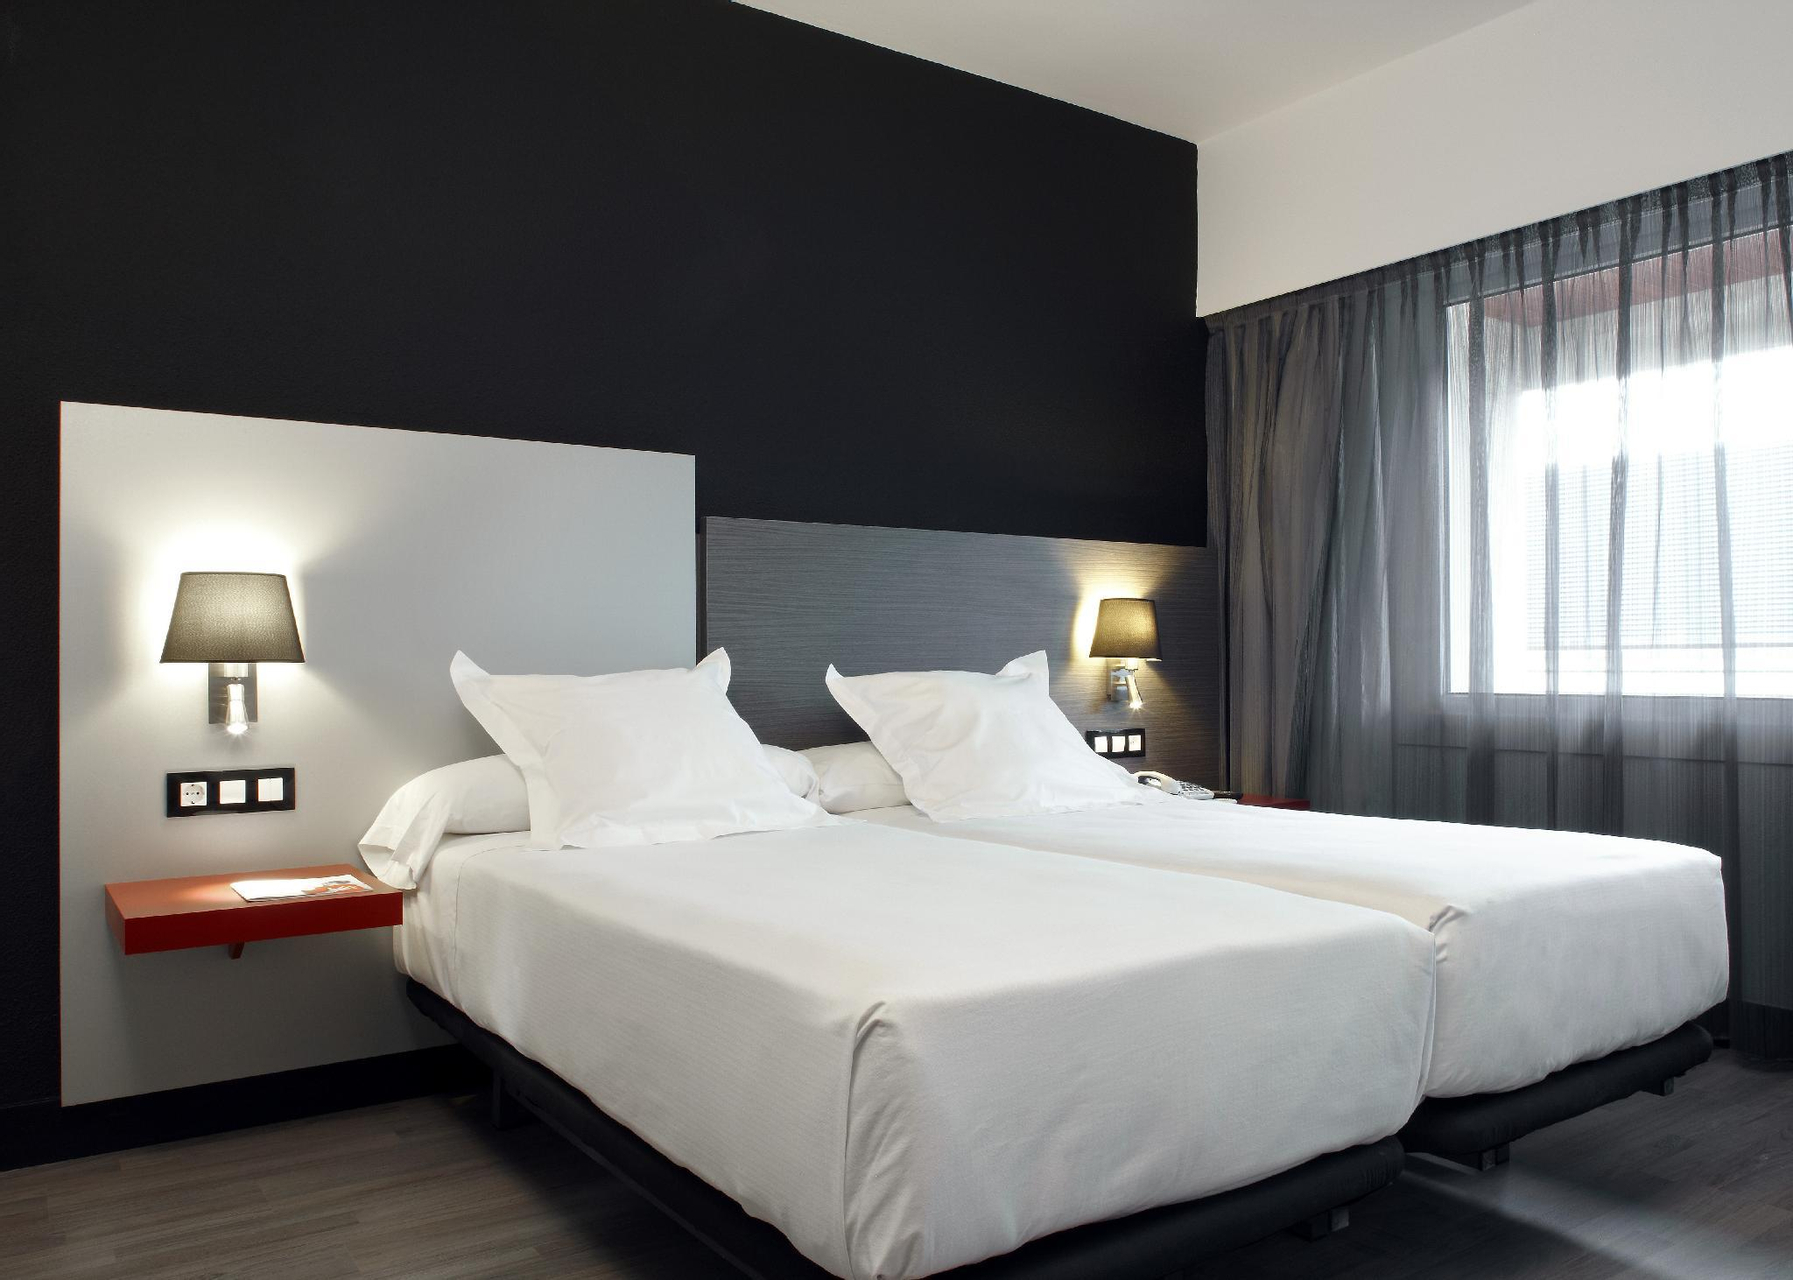 Bedroom, Ilunion Romareda Hotel, Zaragoza